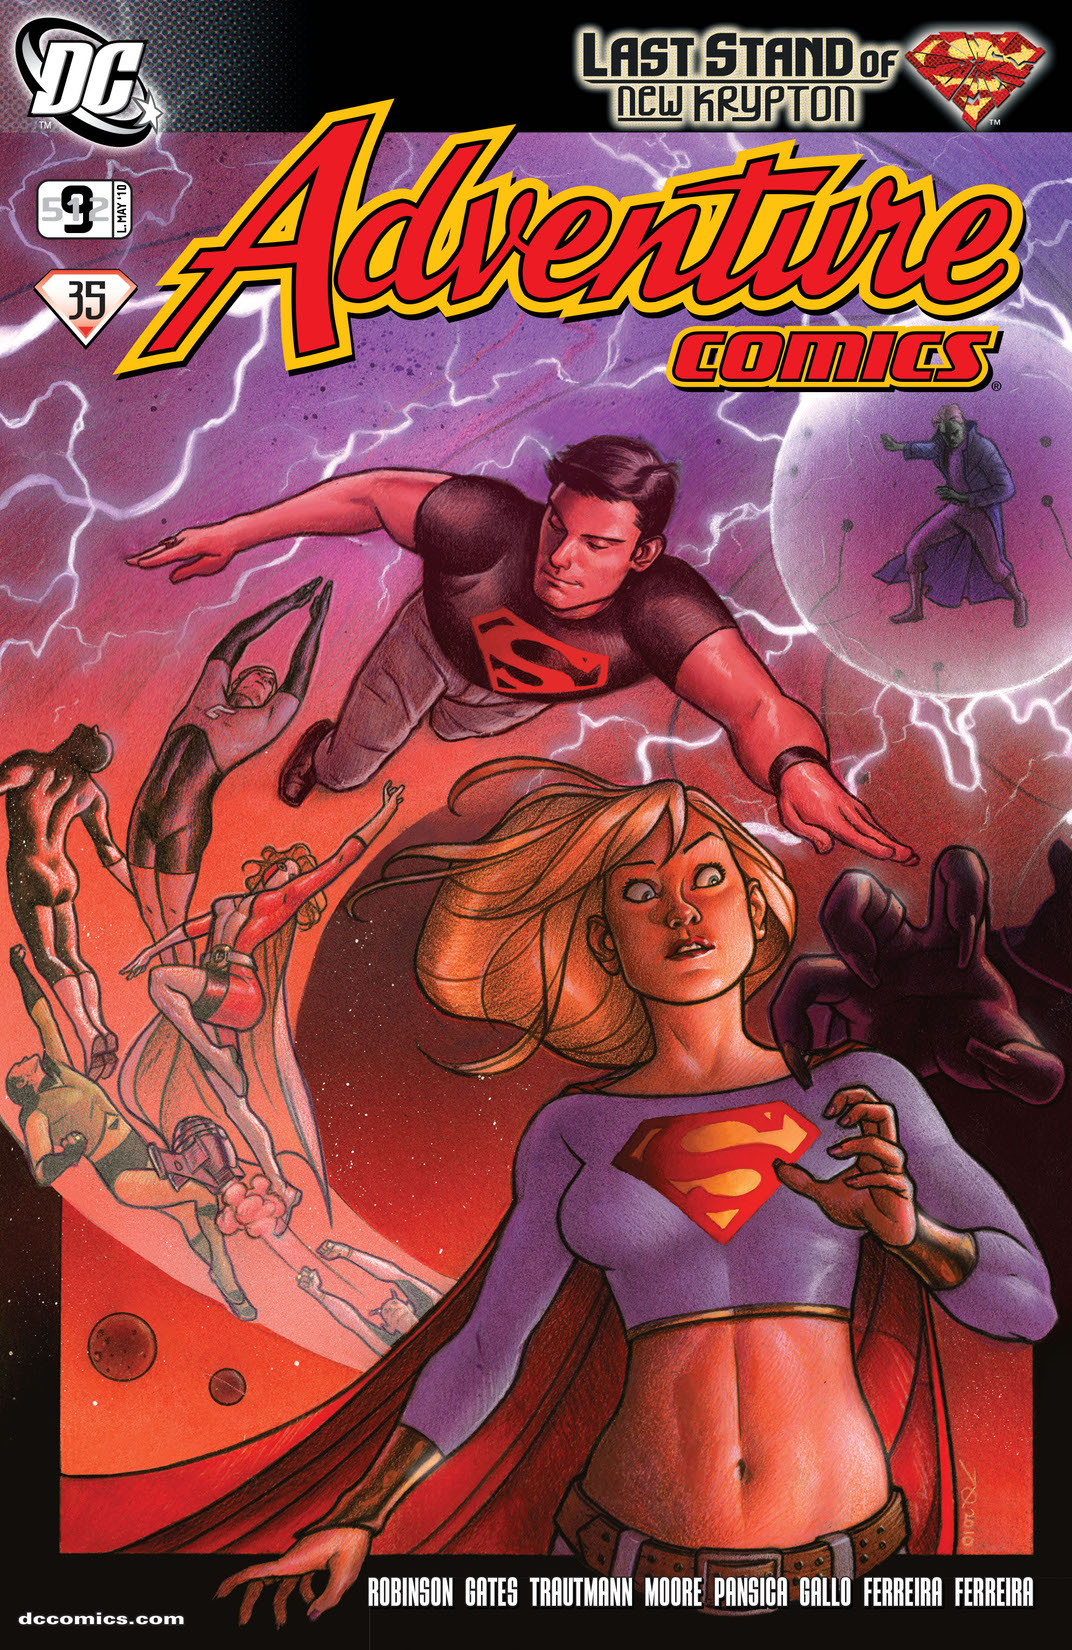 Adventure Comics (2009-) #9 preview images